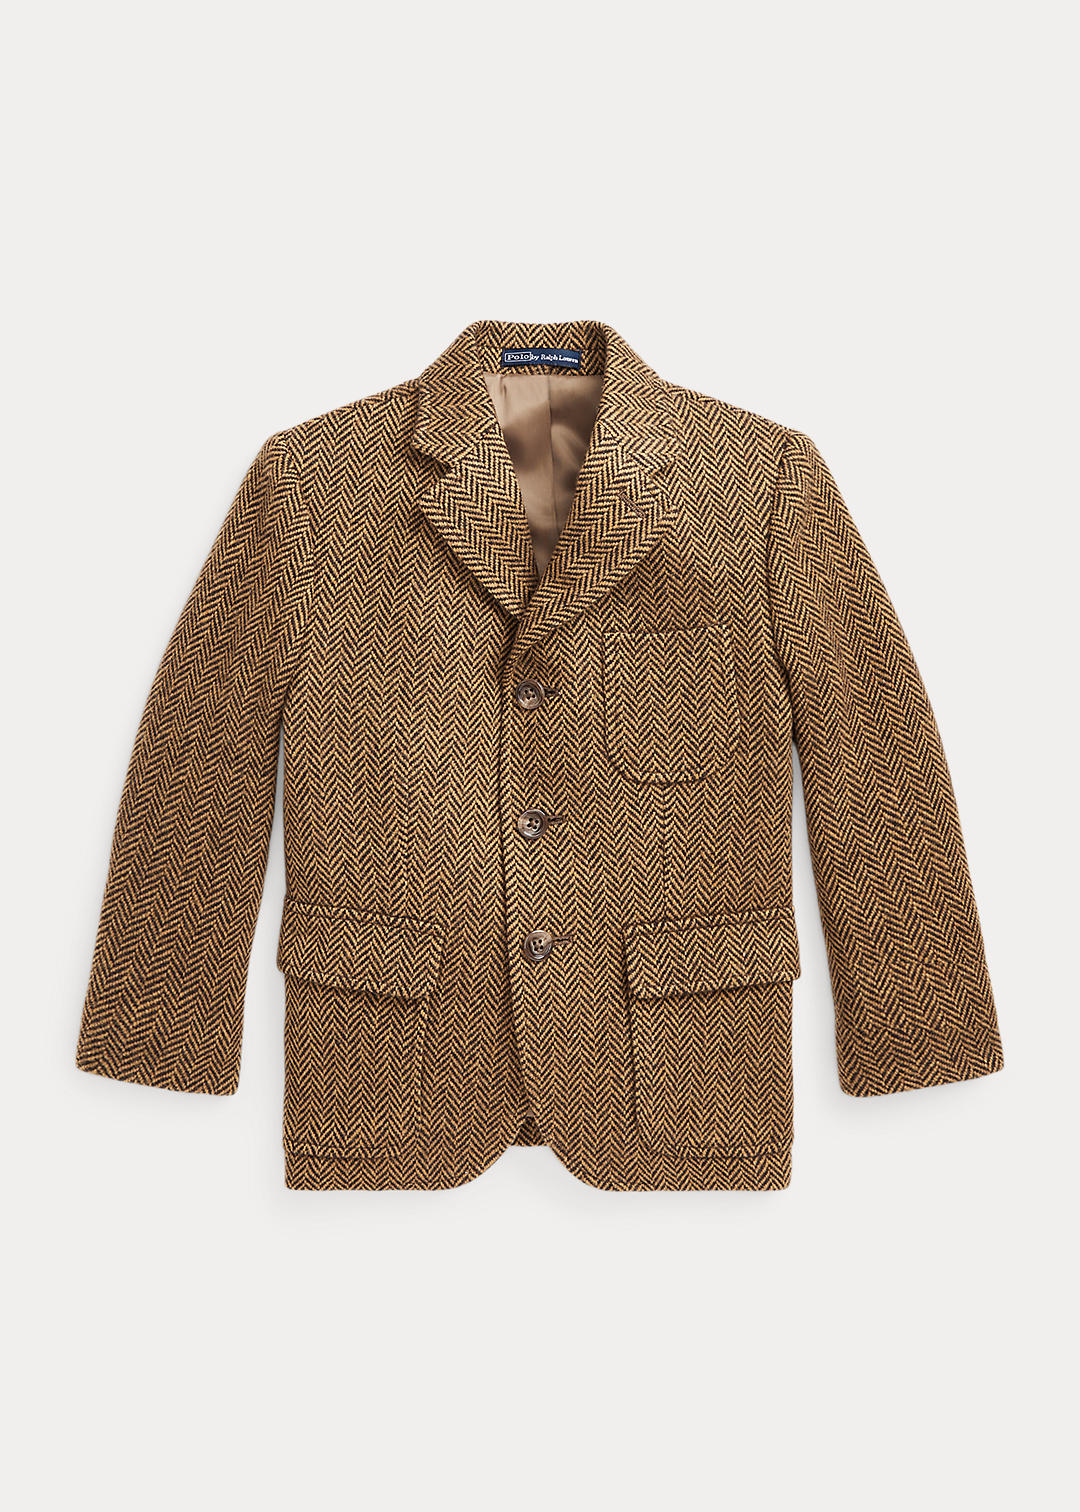 Wool-Blend Herringbone Sport Coat